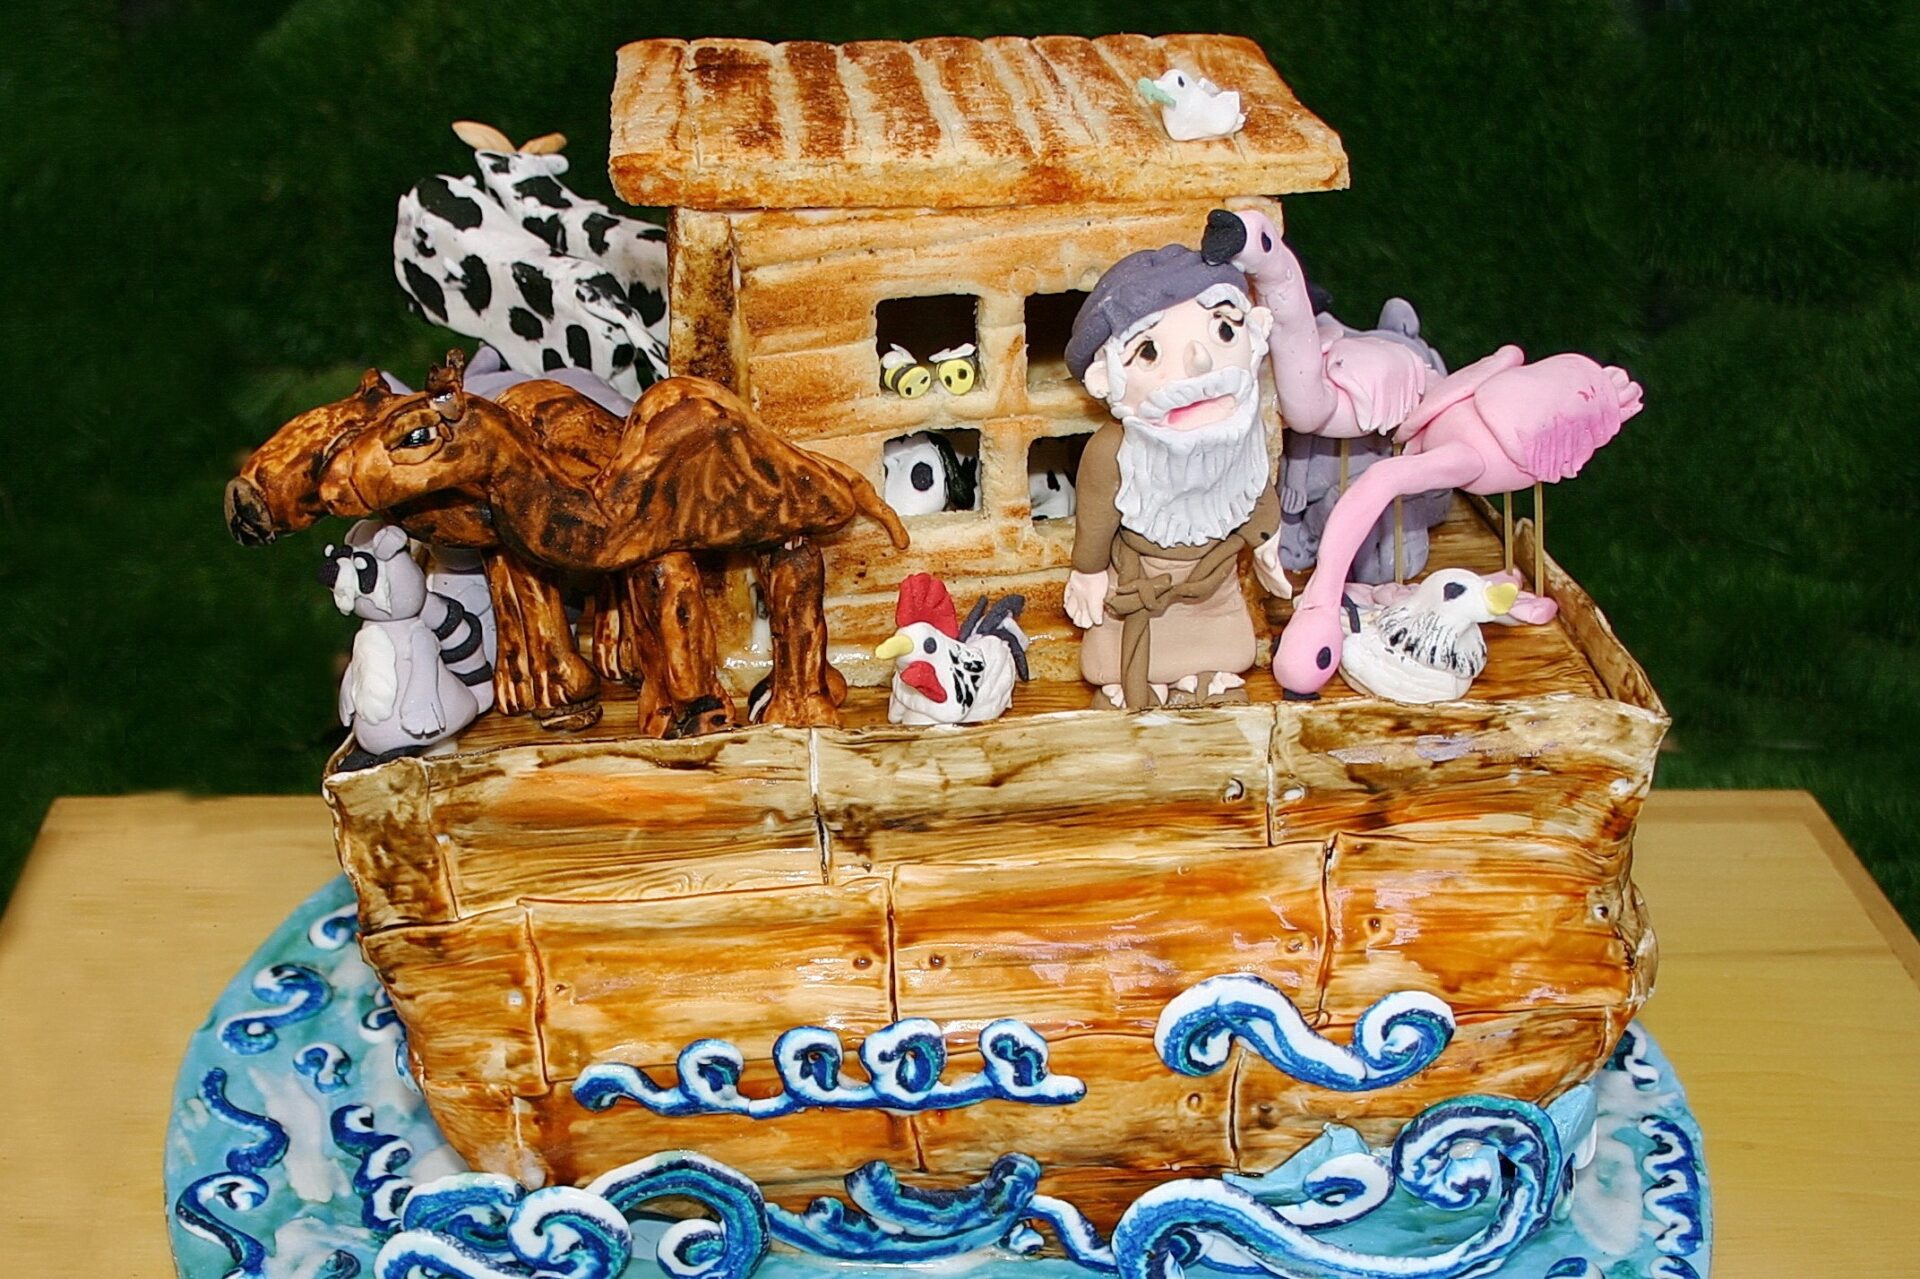 Noah's Ark birthday cake - Decorated Cake by Happy Little - CakesDecor